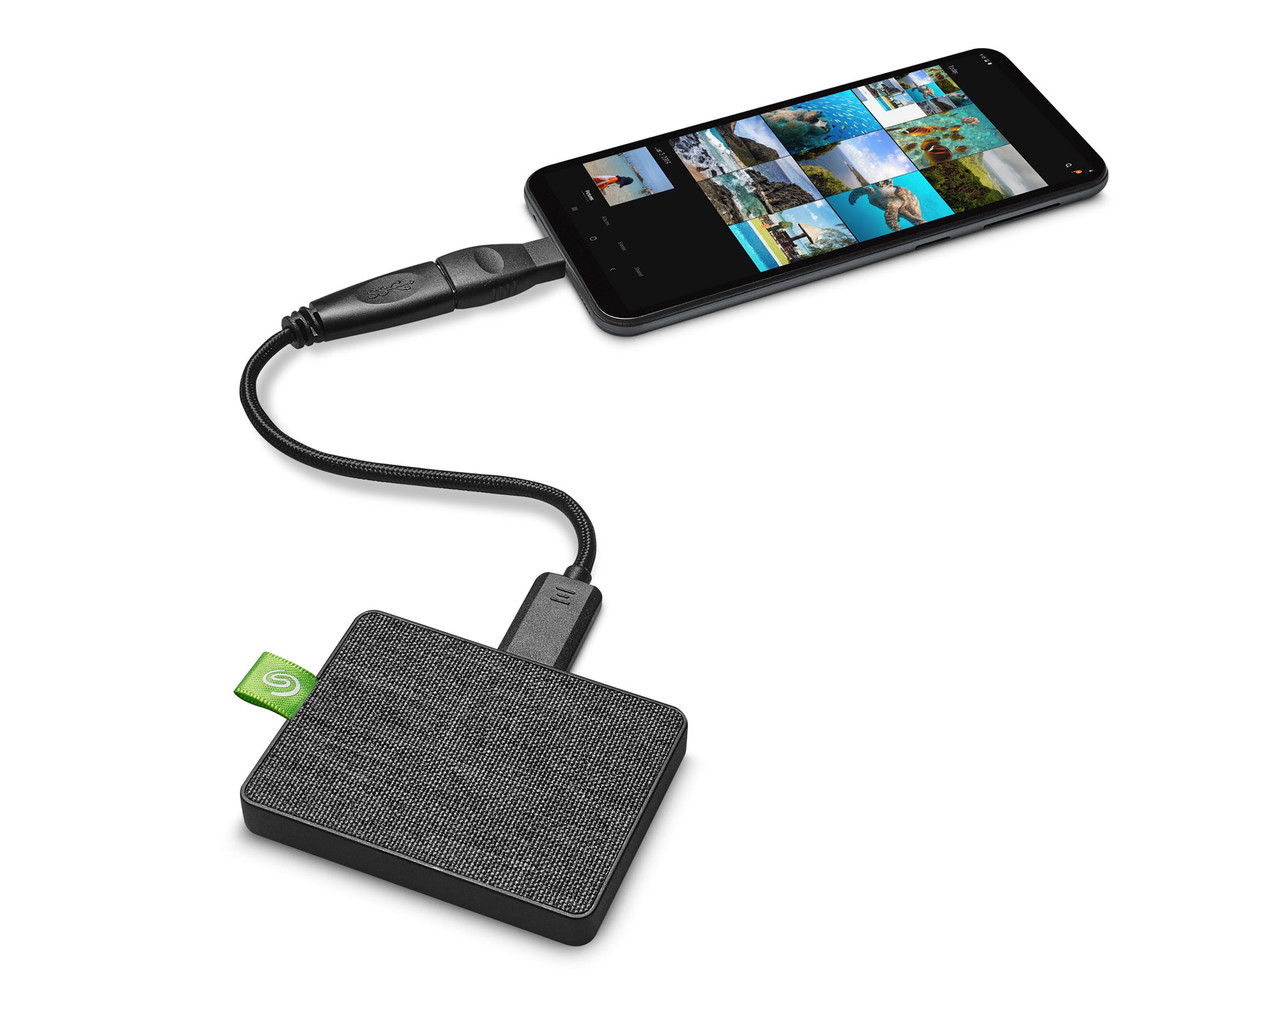 ▲ USB 타입C 케이블로 스마트폰과 연결한 씨게이트 울트라 터치 SSD